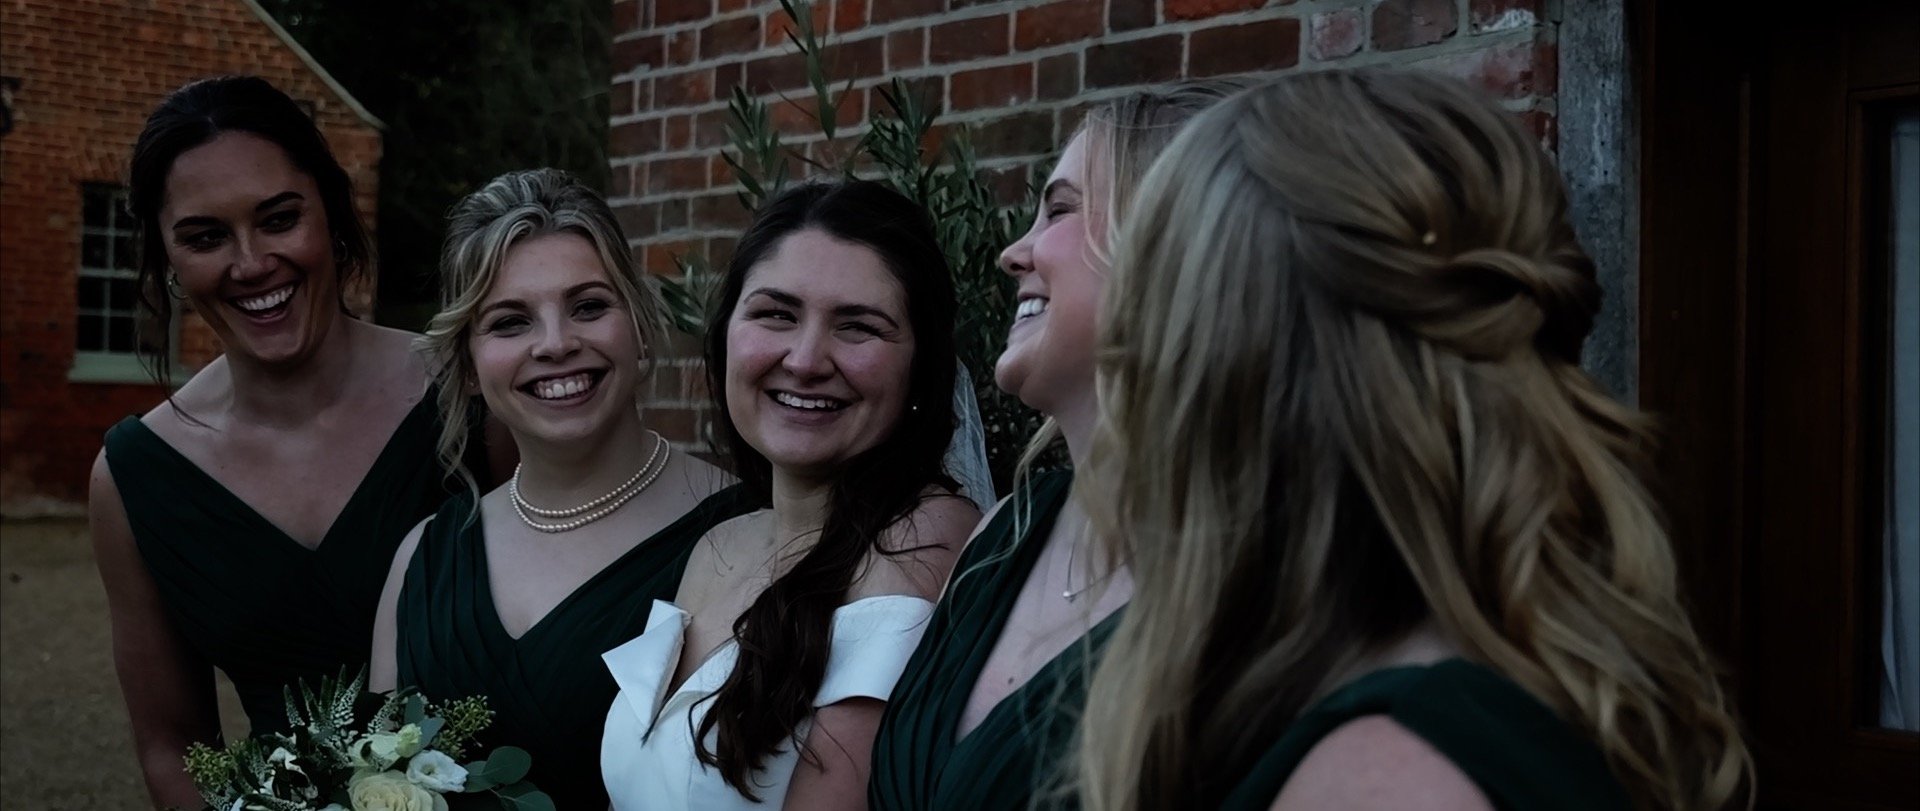 Apton Hall Wedding Videography - 3 Cheers Media - The Girls.jpg